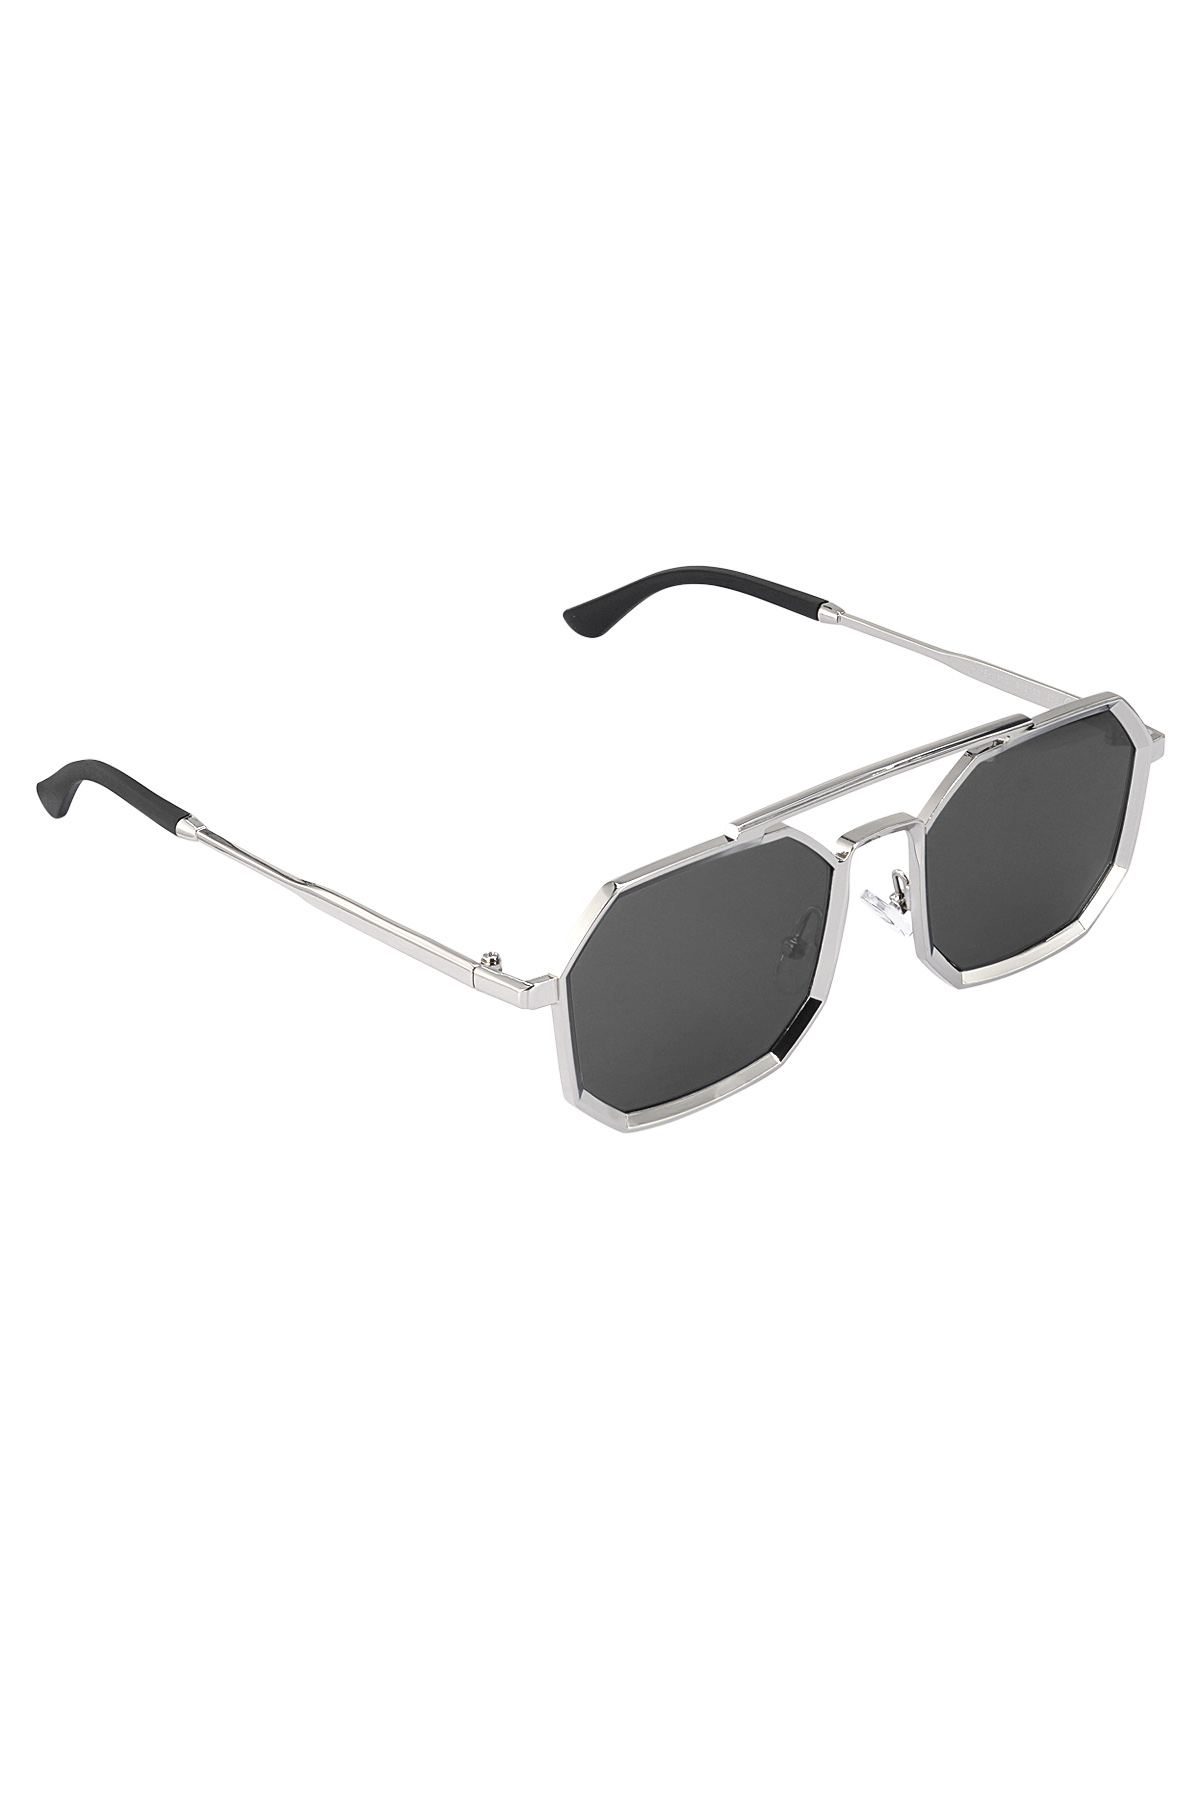 Sunglasses LuminLens - black silver